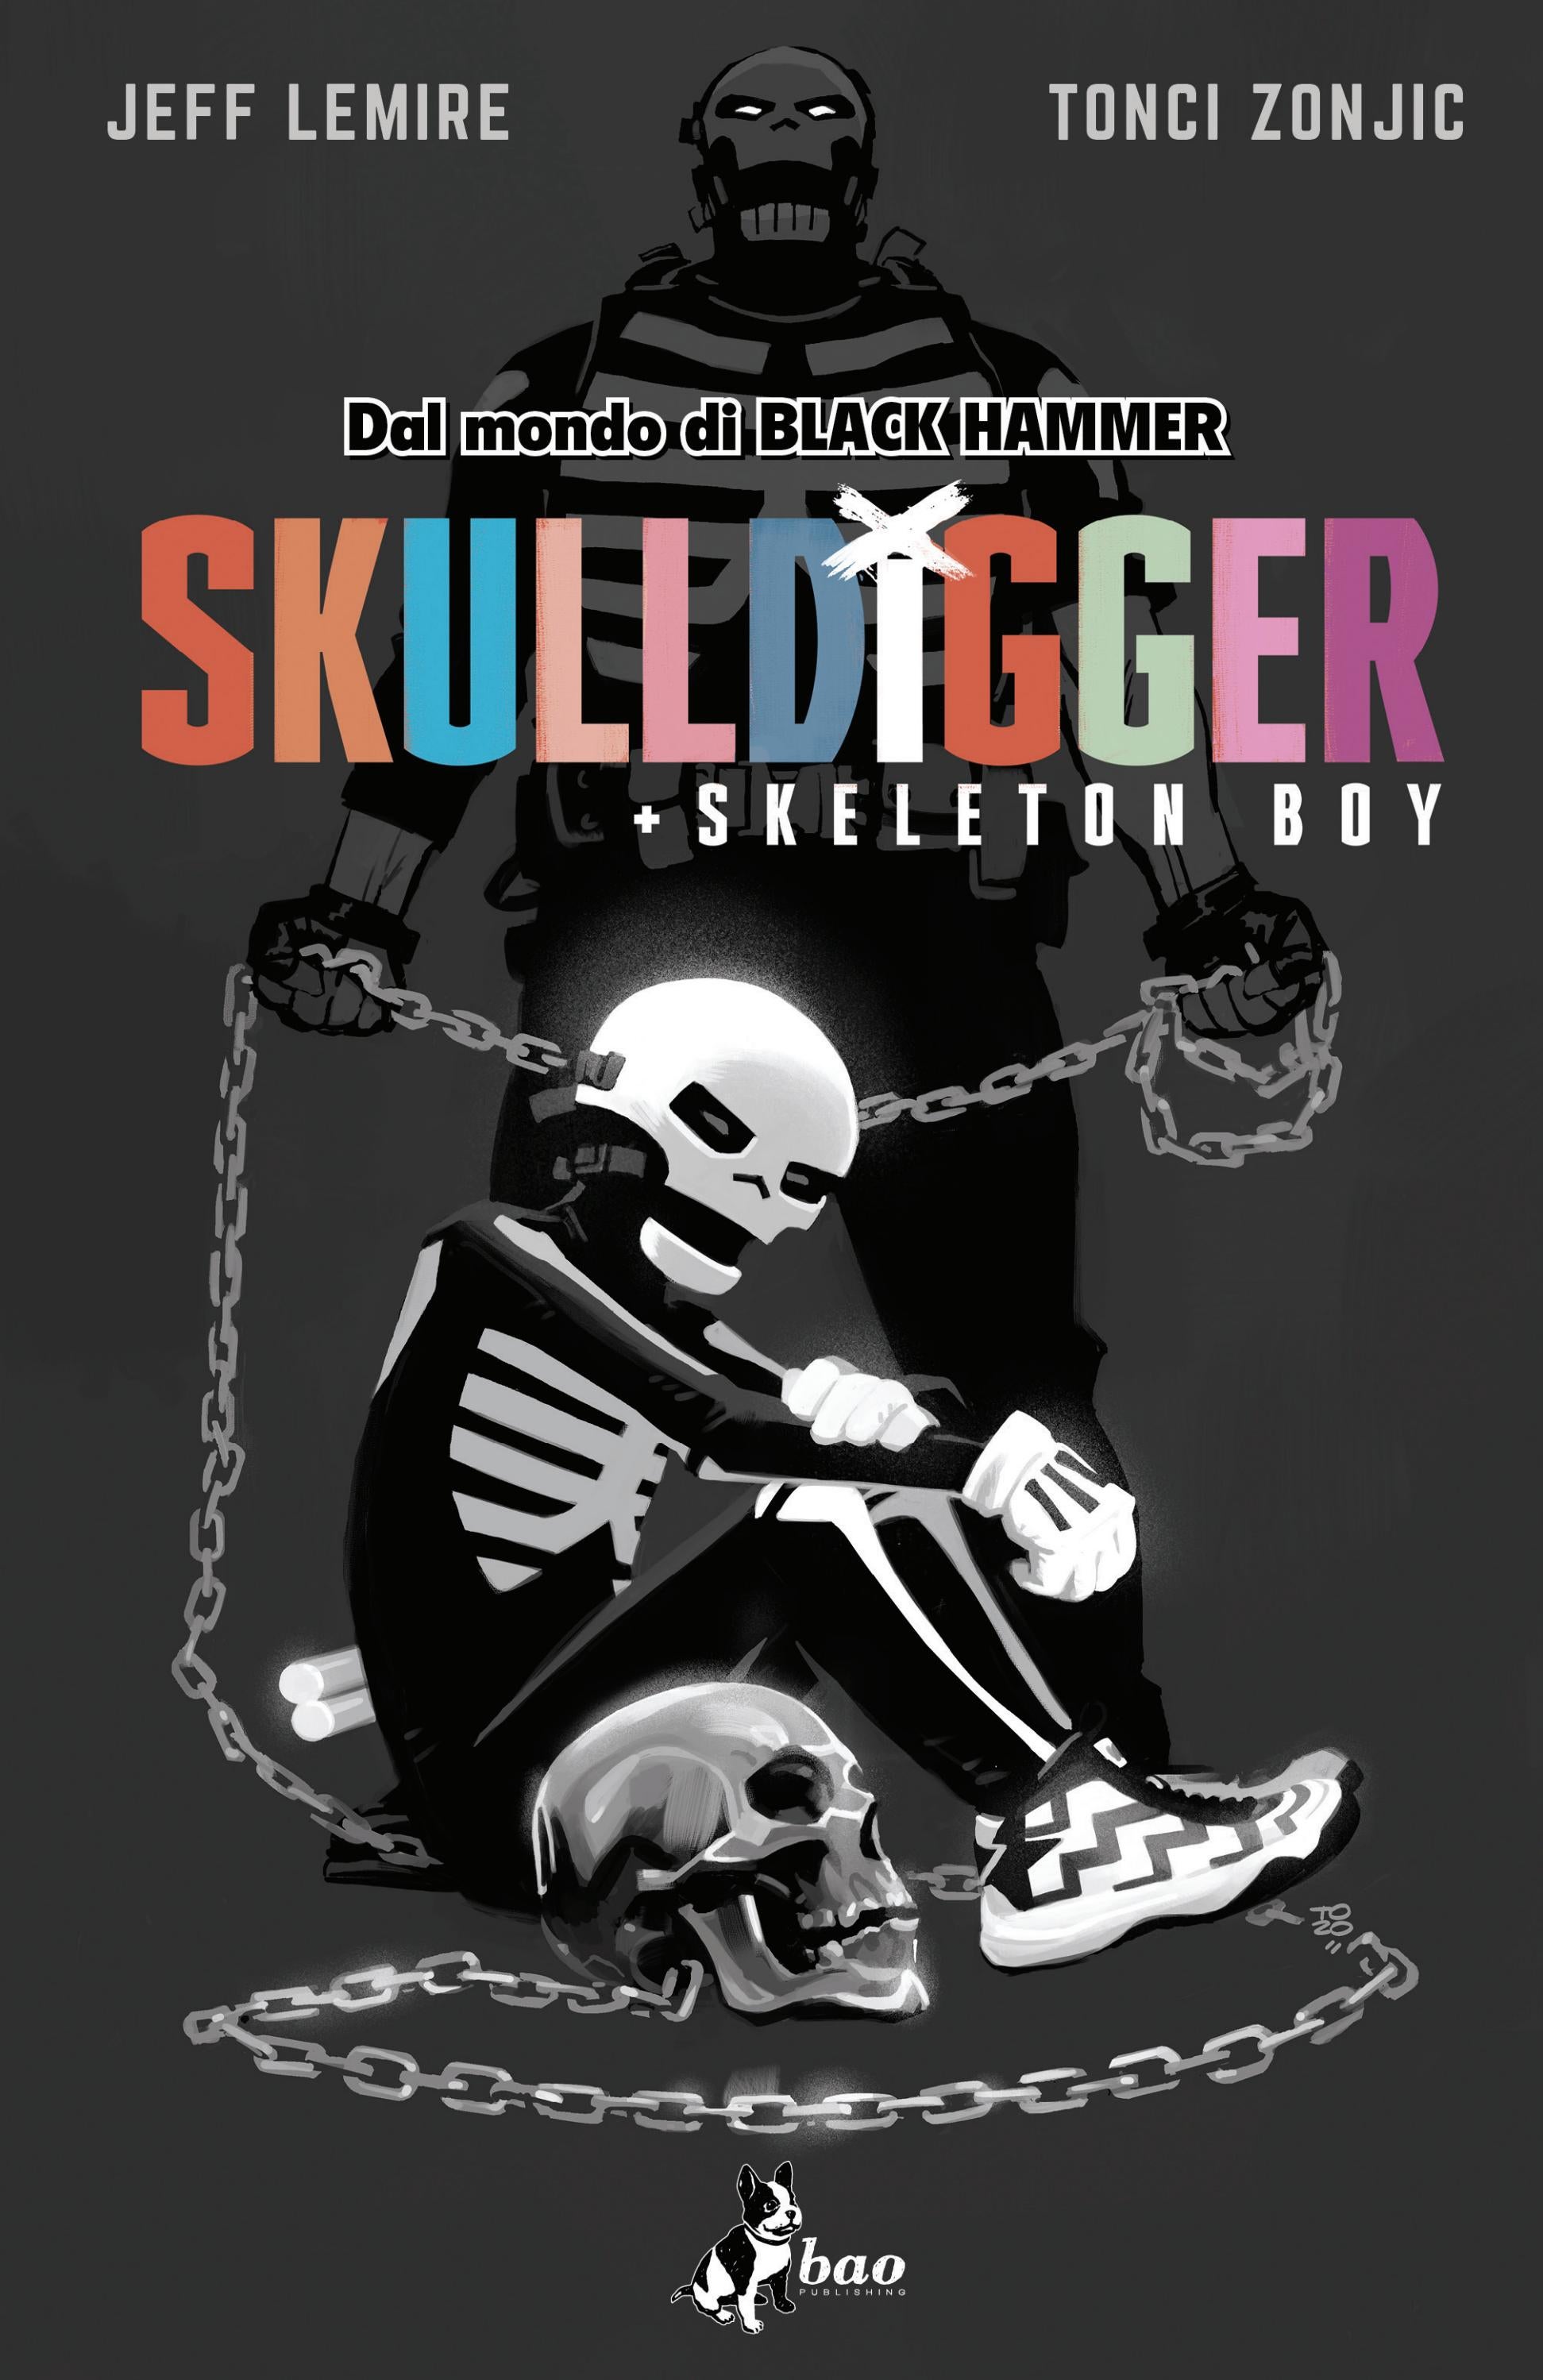 la copertina di skulldigger - nerdface